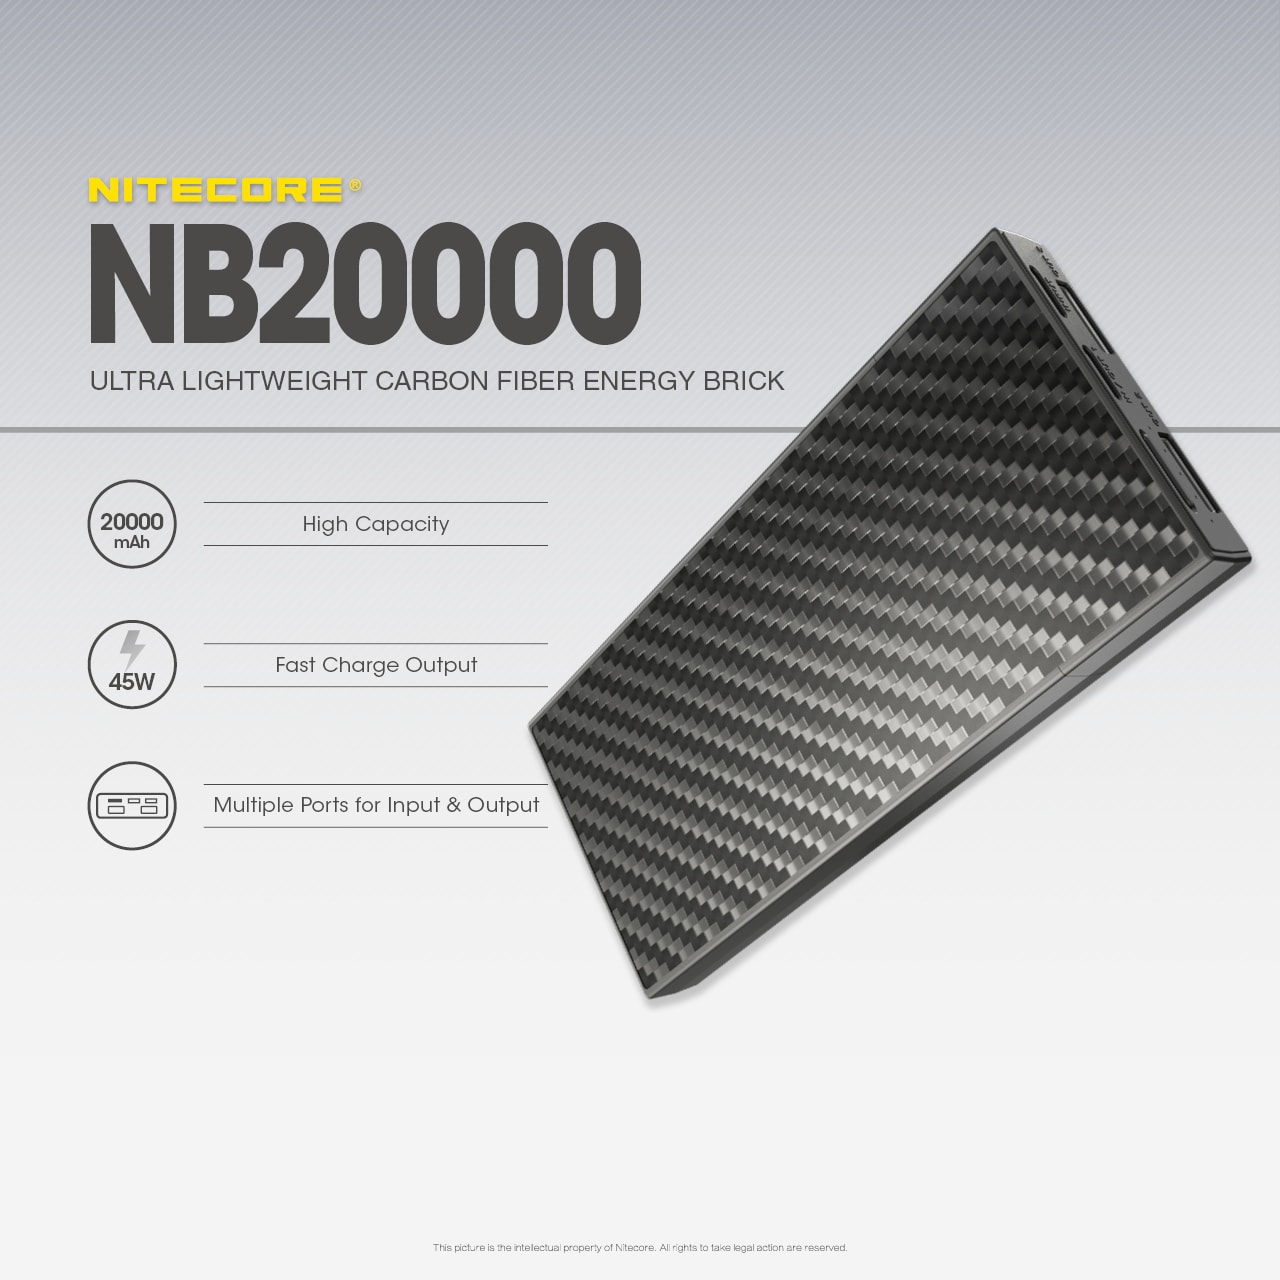 Nitecore NB20000 Basic Specs